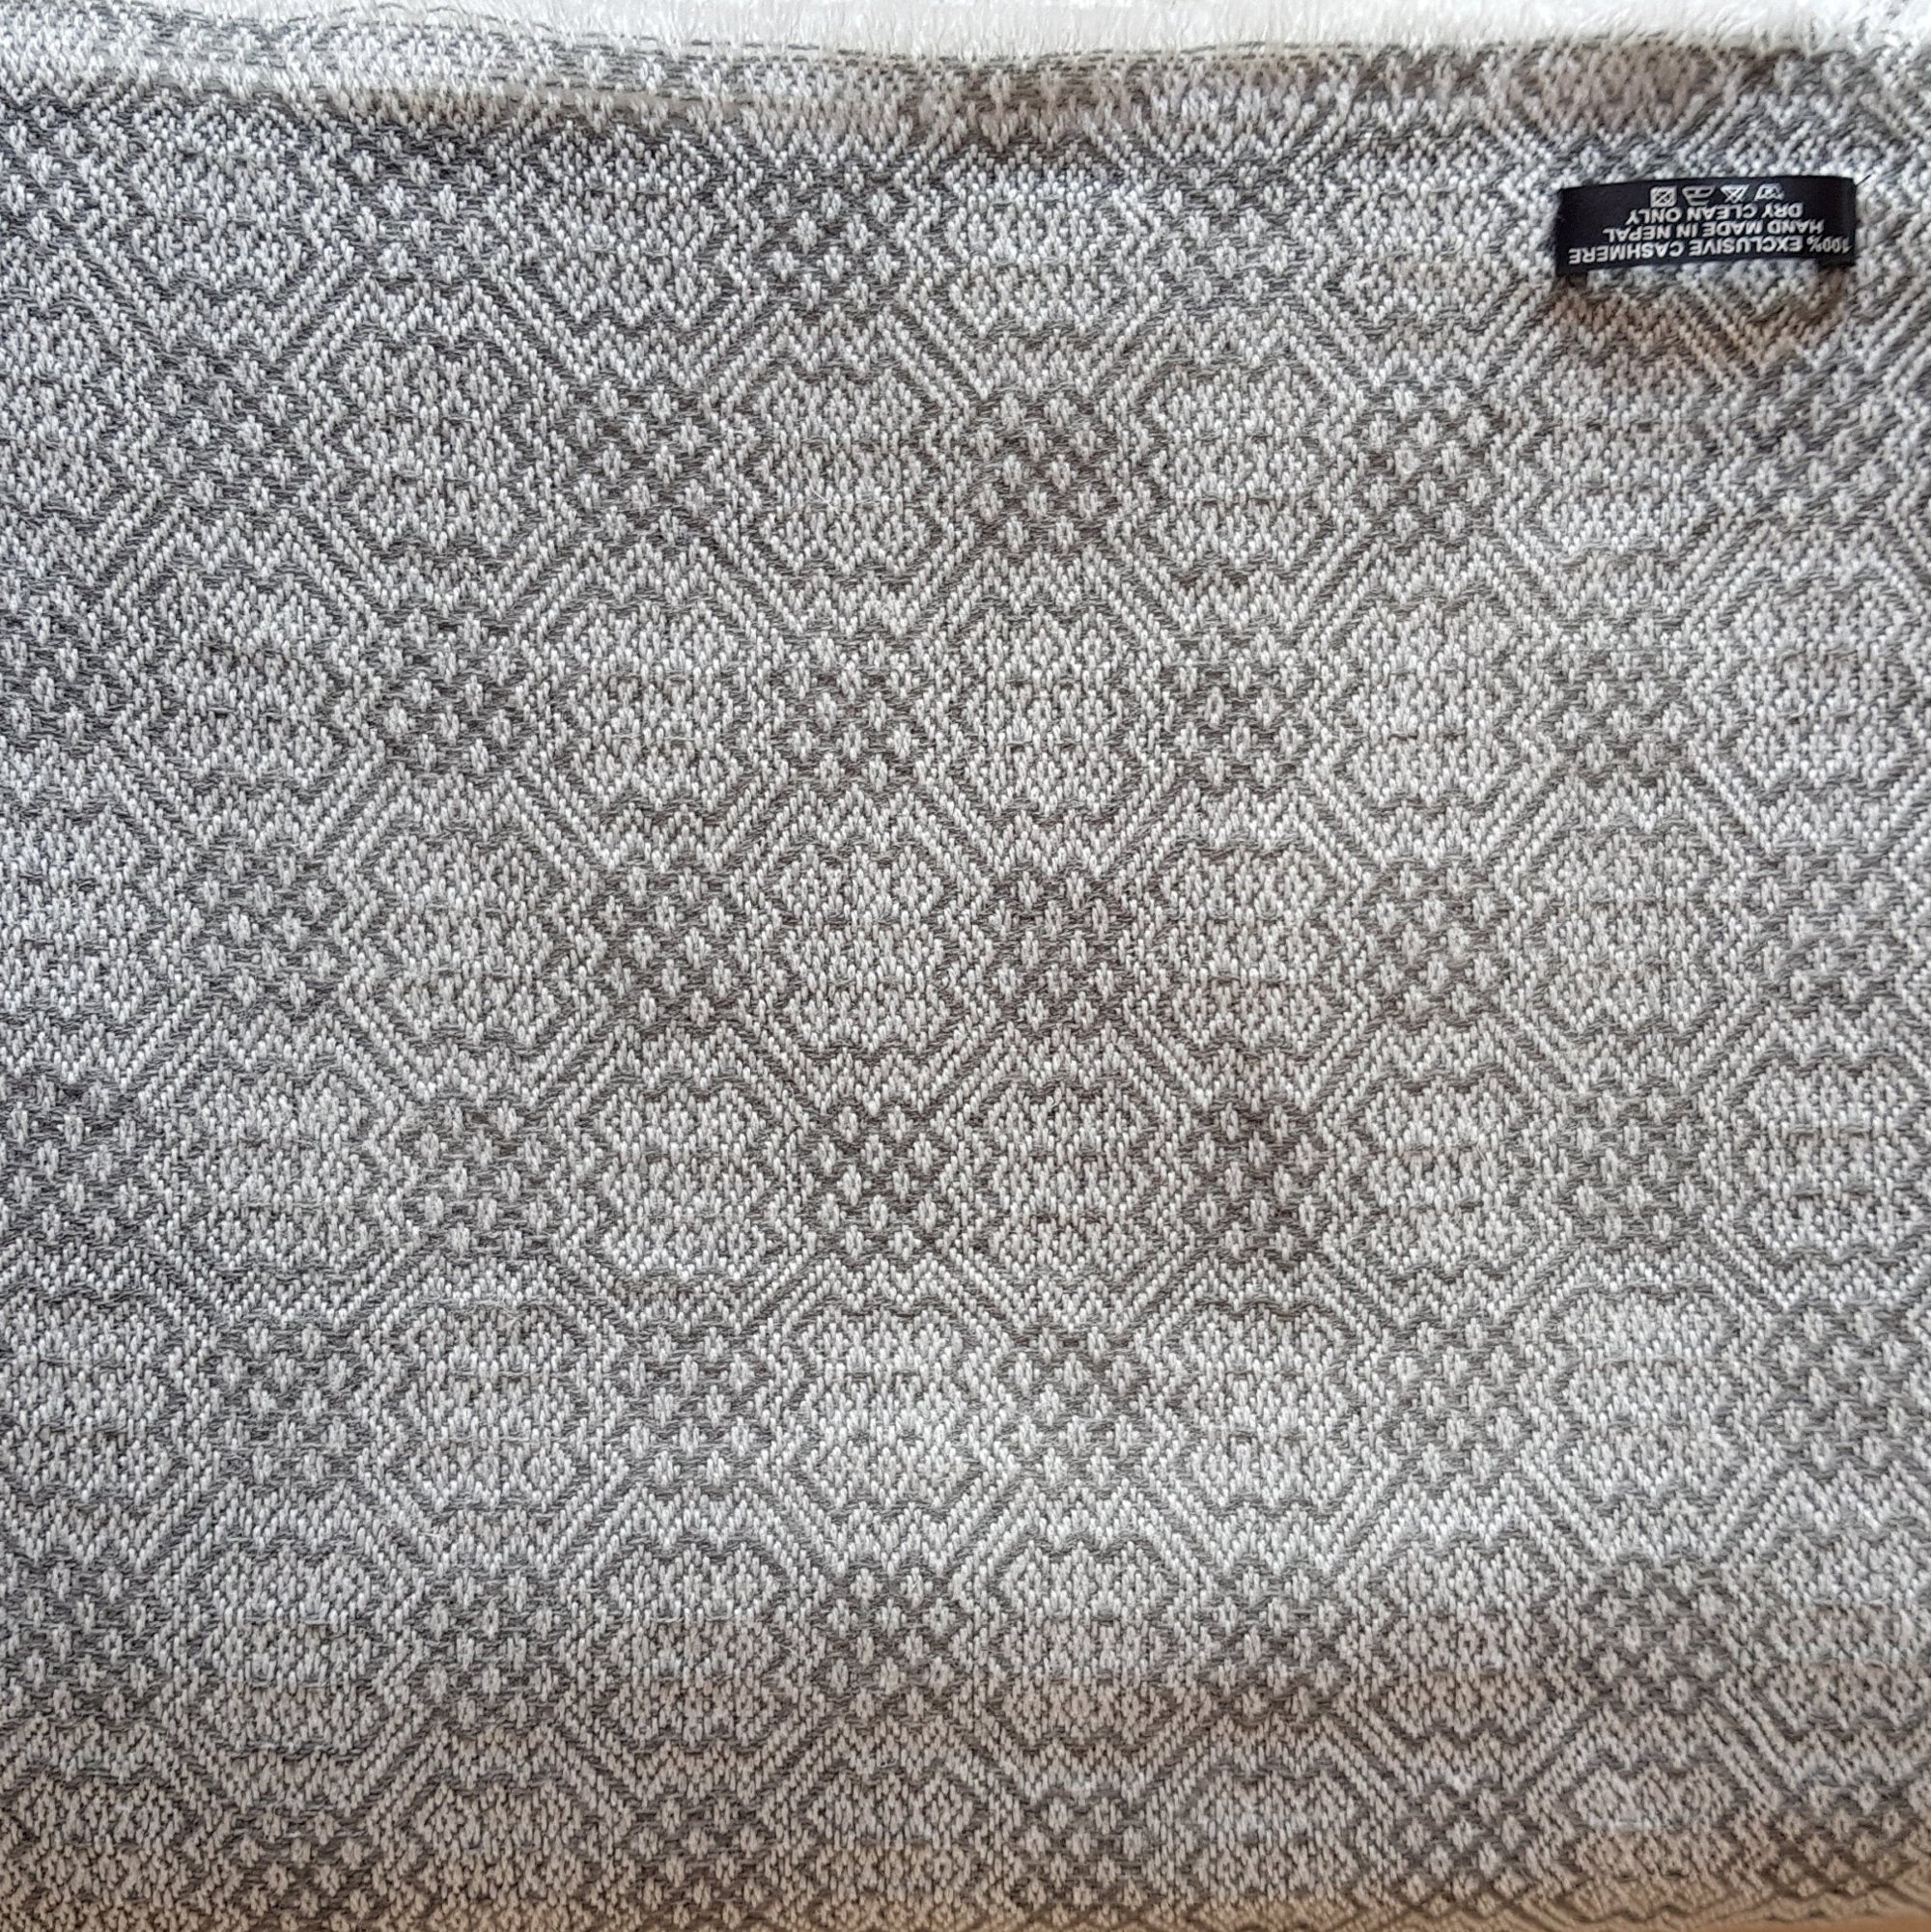 Cashmere blanket, Grey & White Tibetan Infinity Knot